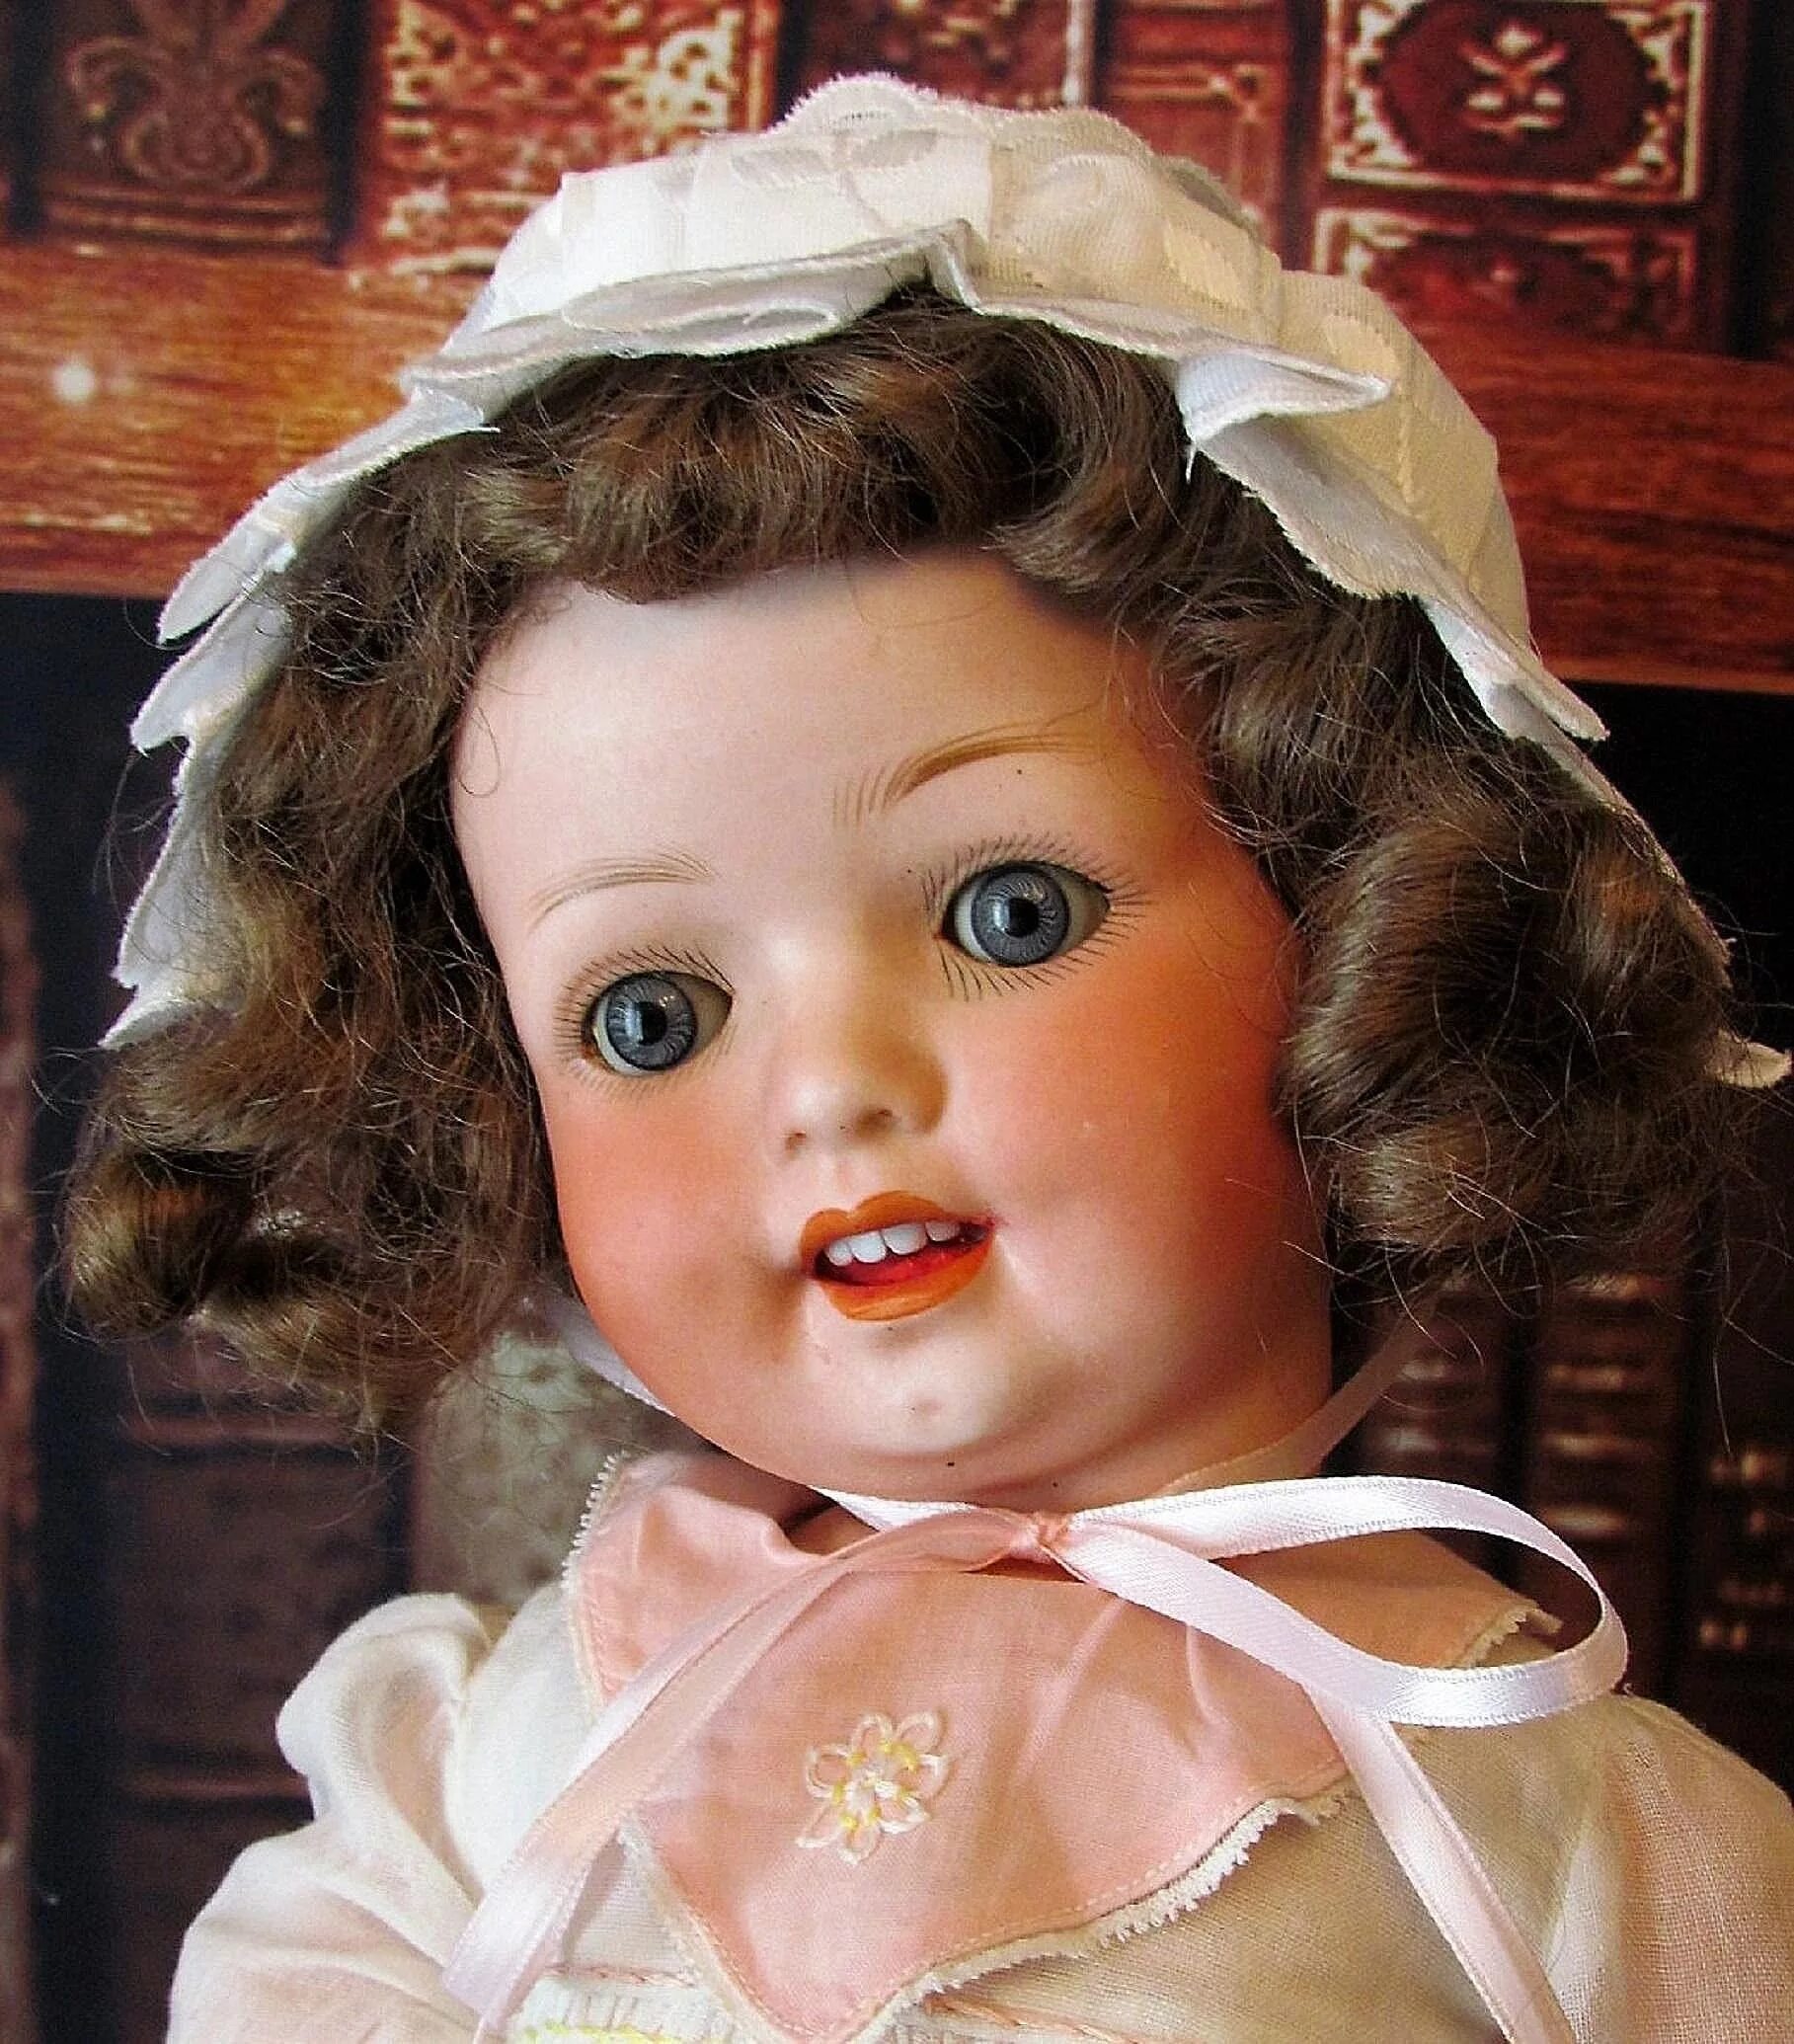 Старая куколка. Куклы Хойбах Коппельсдорф. Heubach 300 Koppelsdorf антикварная кукла Германия. Heubach кукла. Старые куклы.